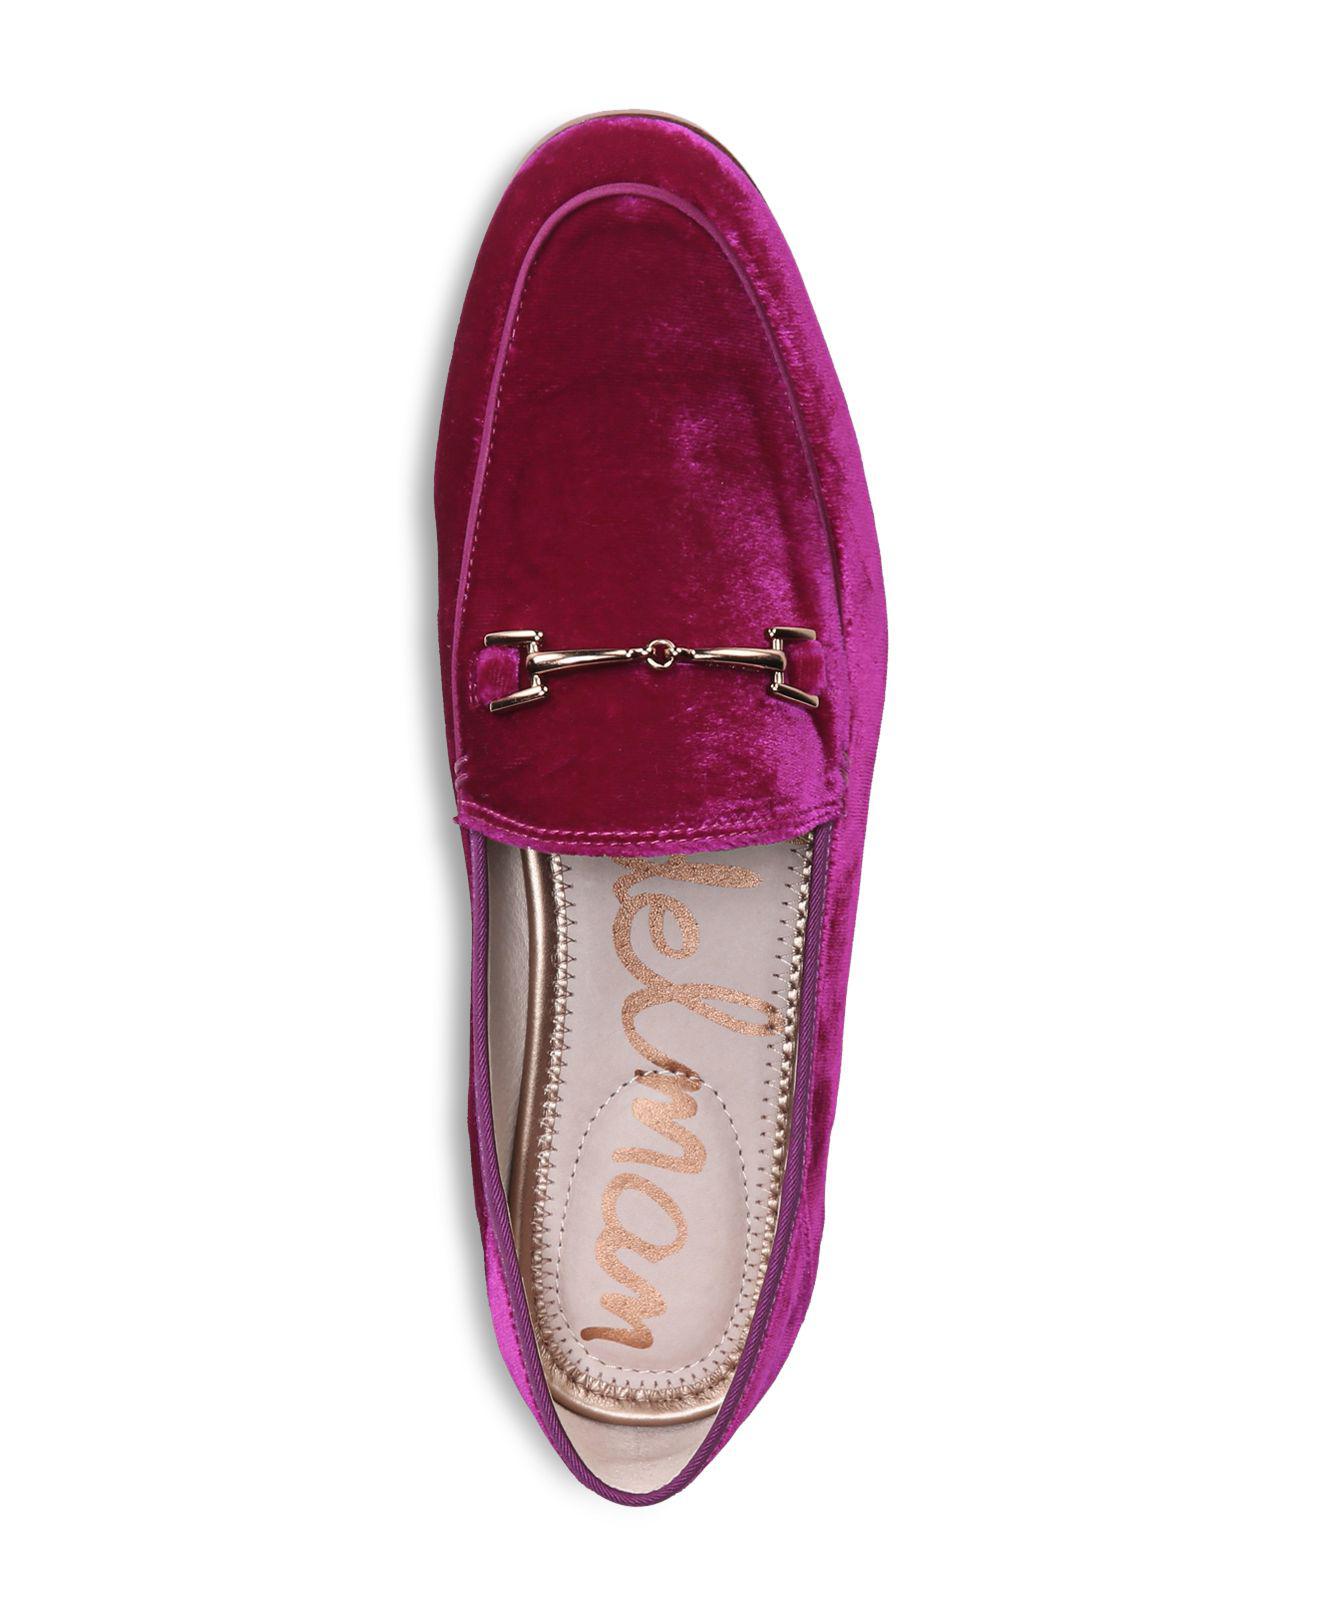 Lyst - Sam Edelman Women's Loraine Velvet Loafers in Pink